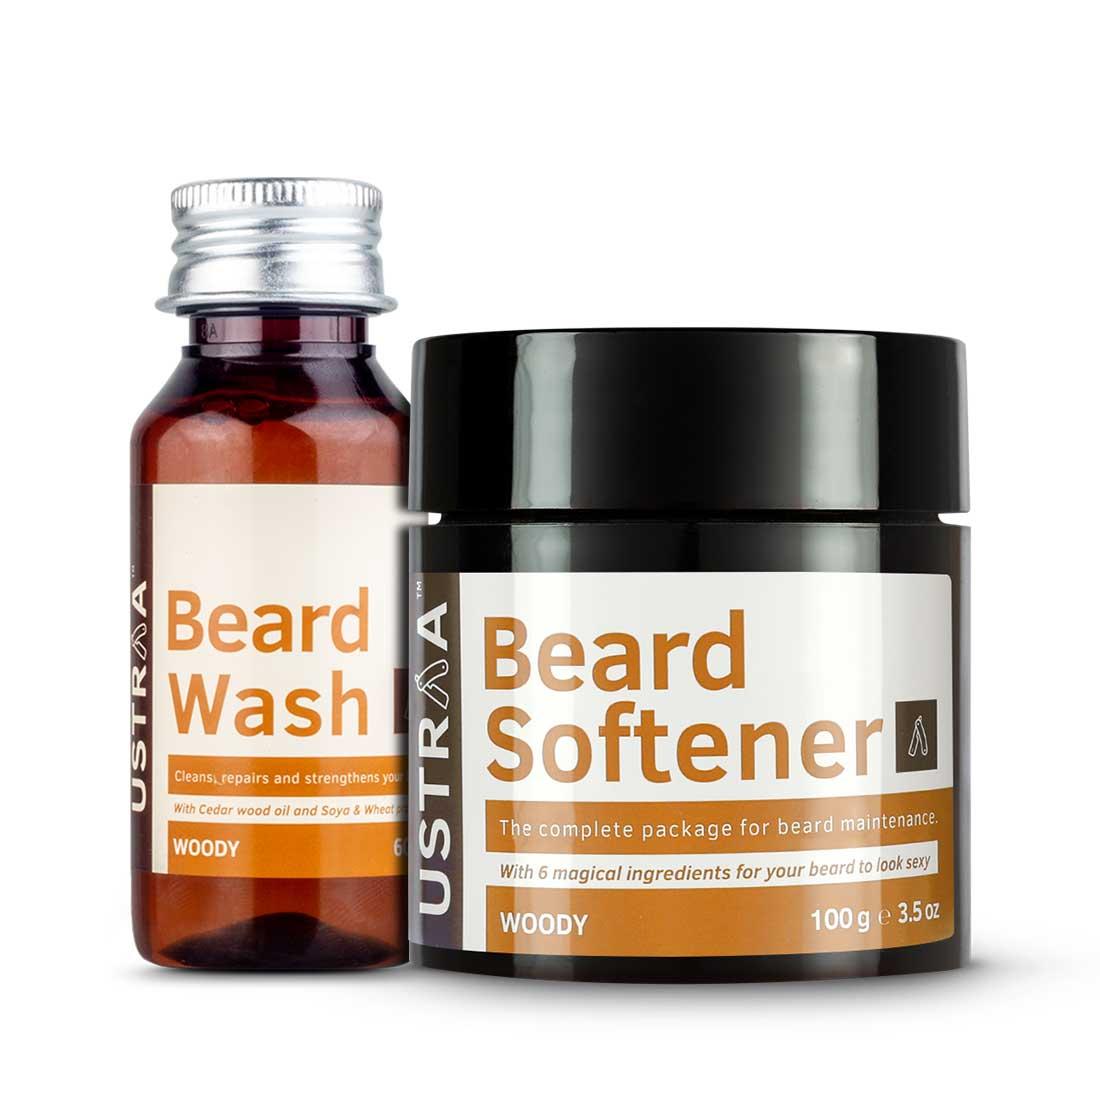 Beard Softener & Beard Wash (Woody)